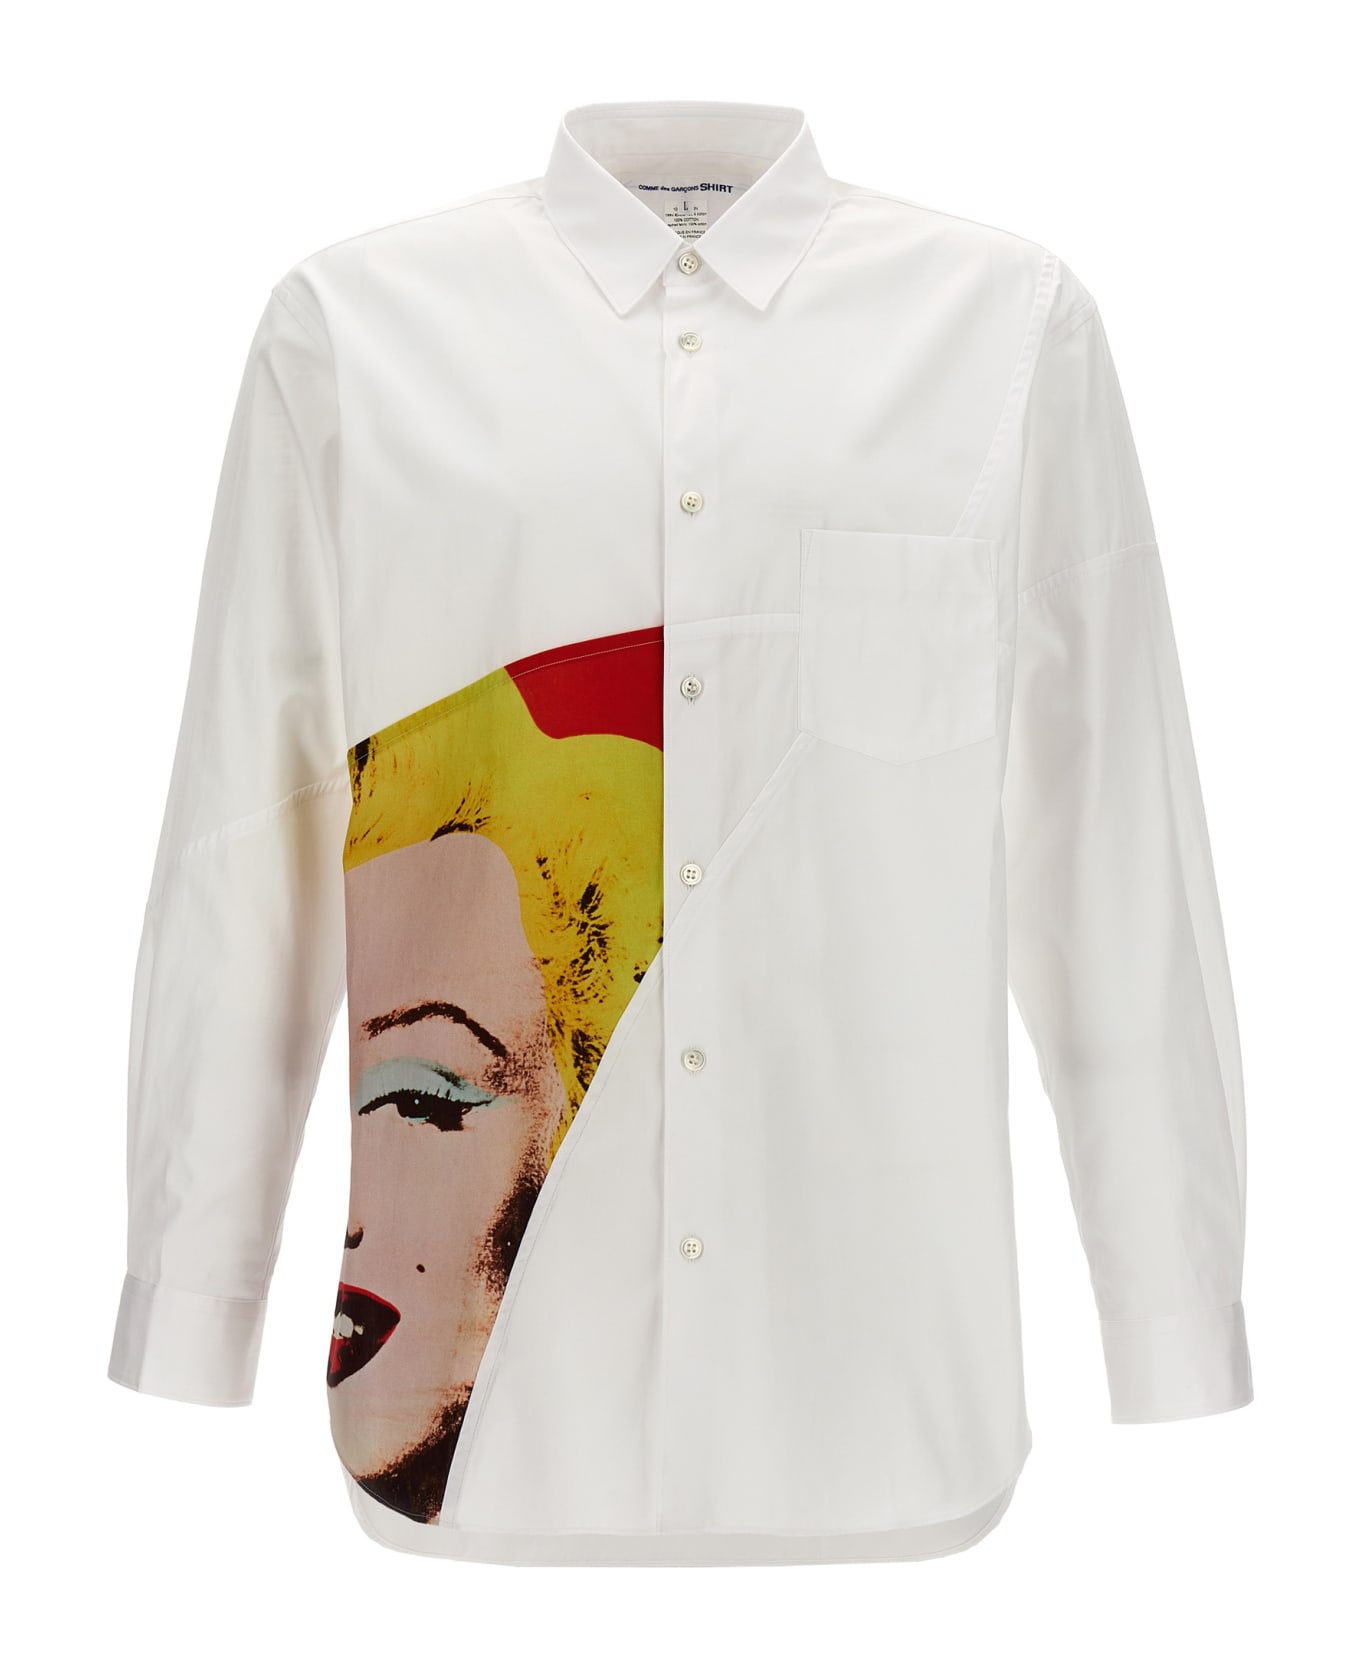 Comme des Garçons Shirt 'andy Warhol' Shirt - White シャツ